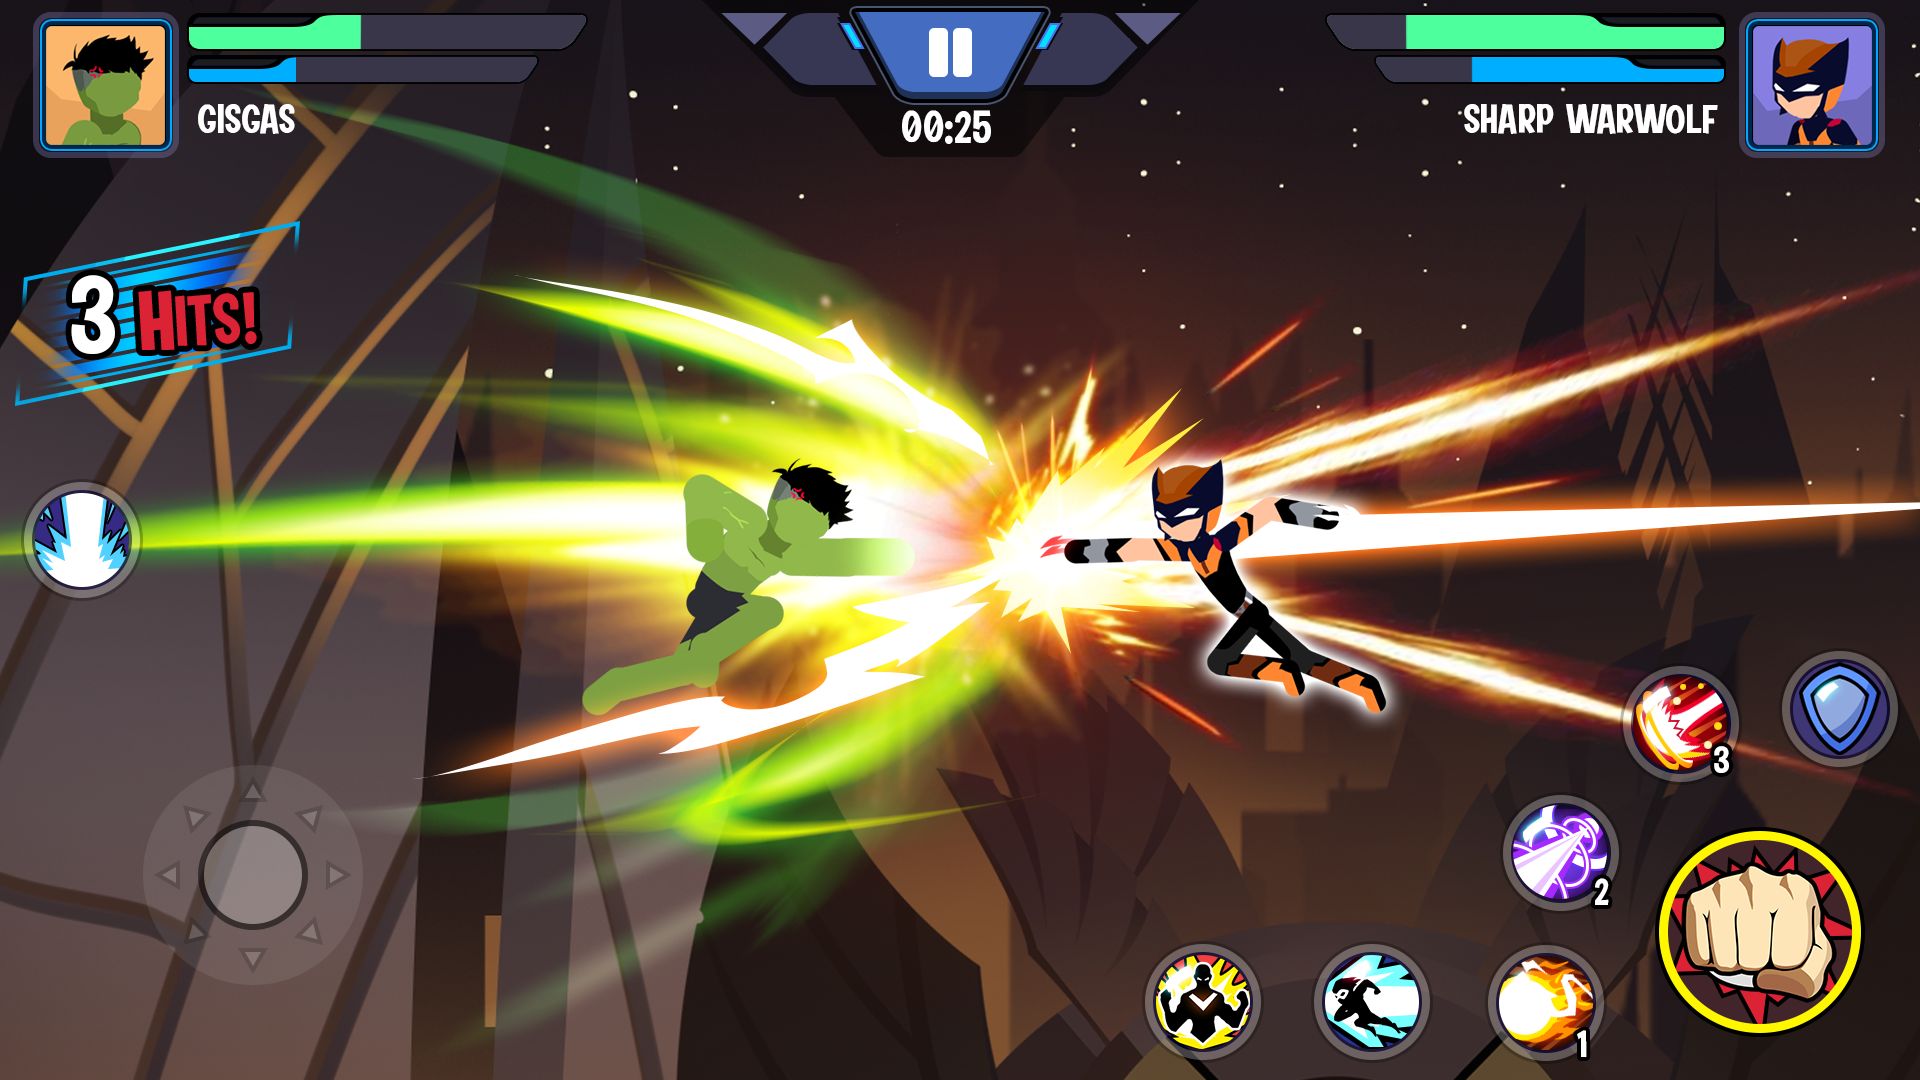 Stickman Superhero - Super Stick Heroes Fight screenshot 1